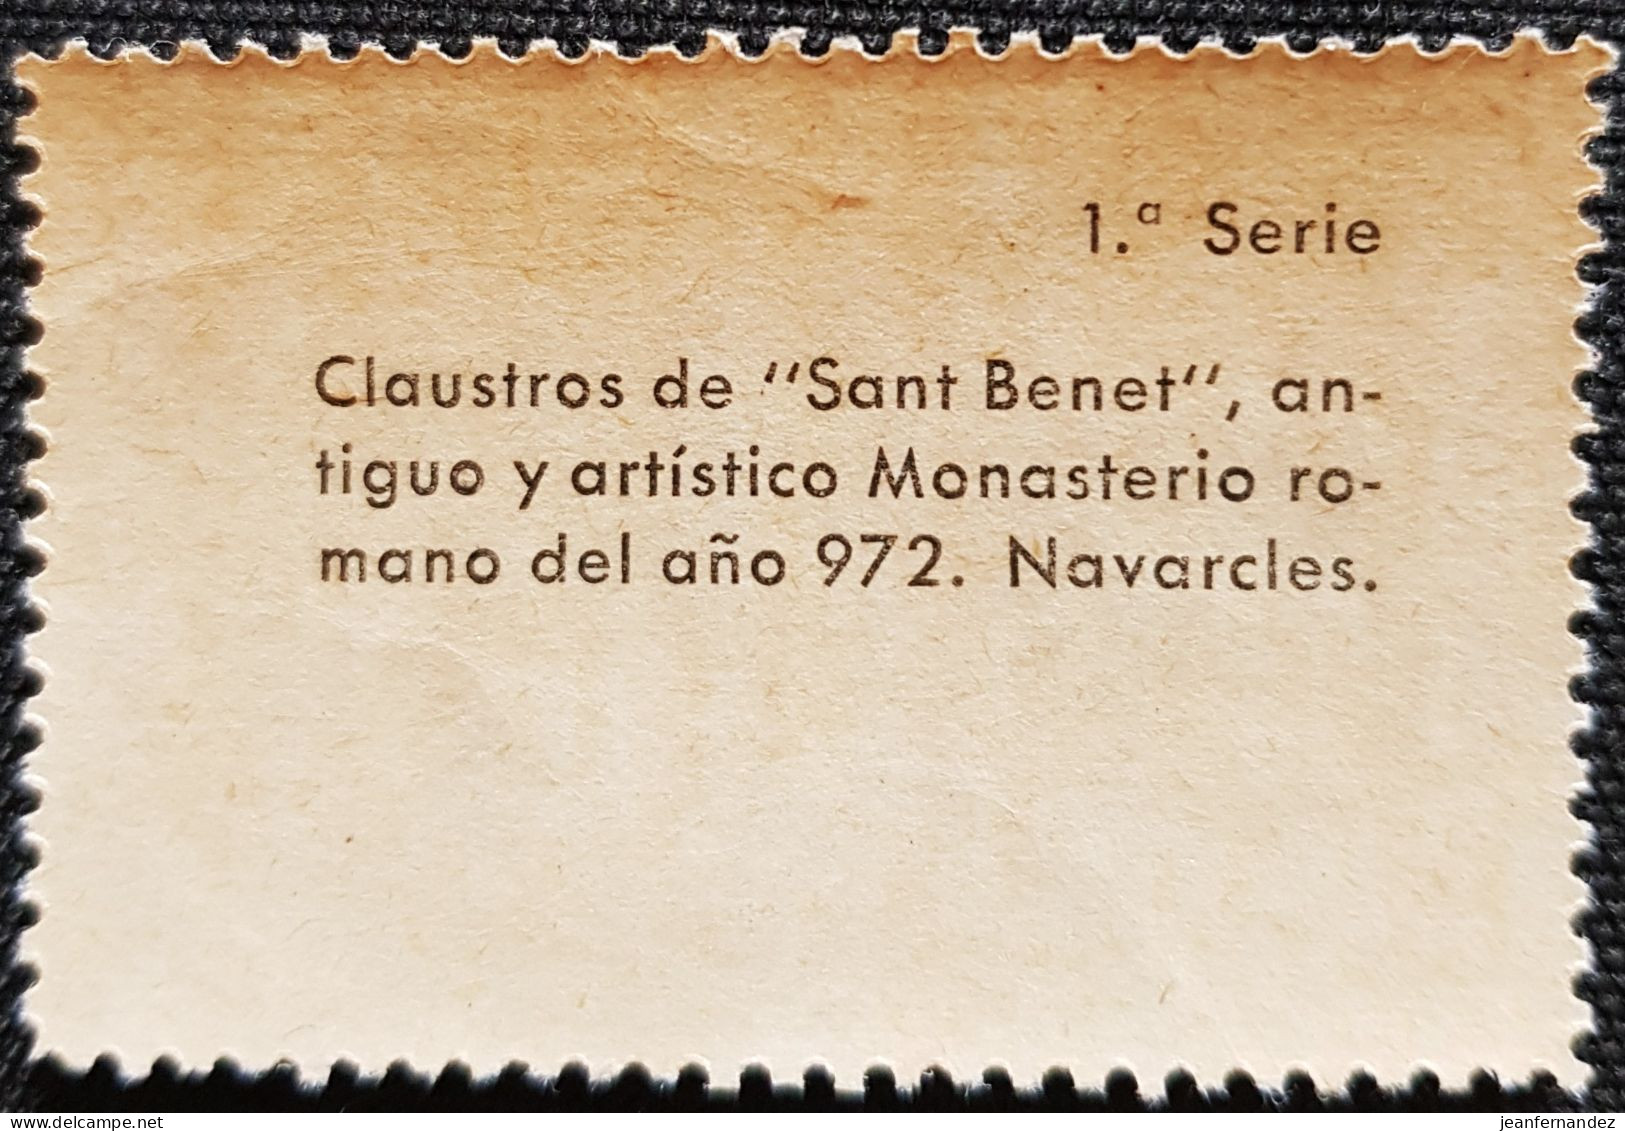 VIÑETAS 1947 Primer Congreso Filatélico, MANRESA Neuf Sans Trace De Charnière - Charity